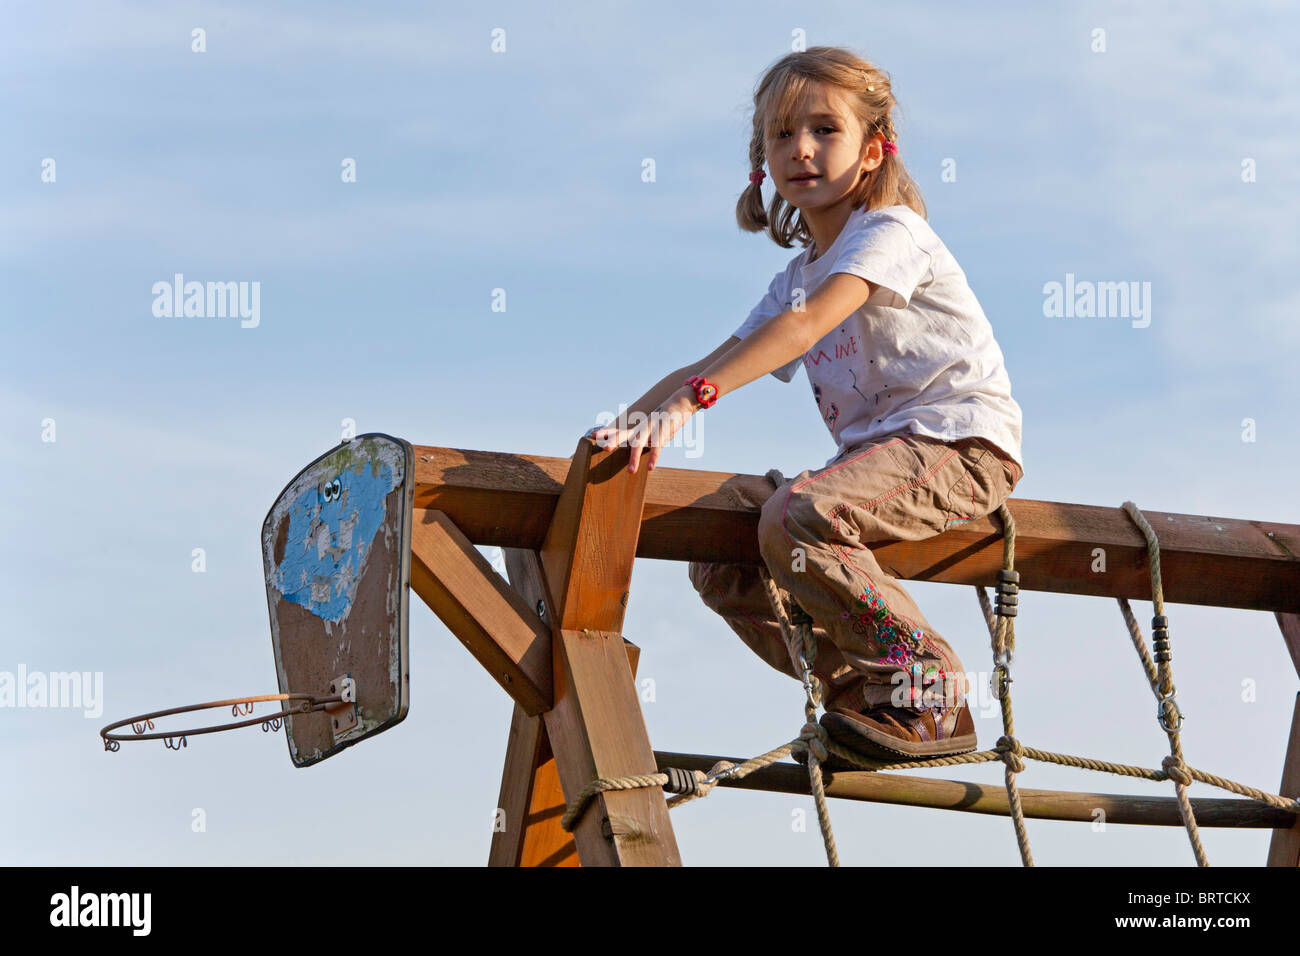 little girl sitting on monkey bars Stock Photo